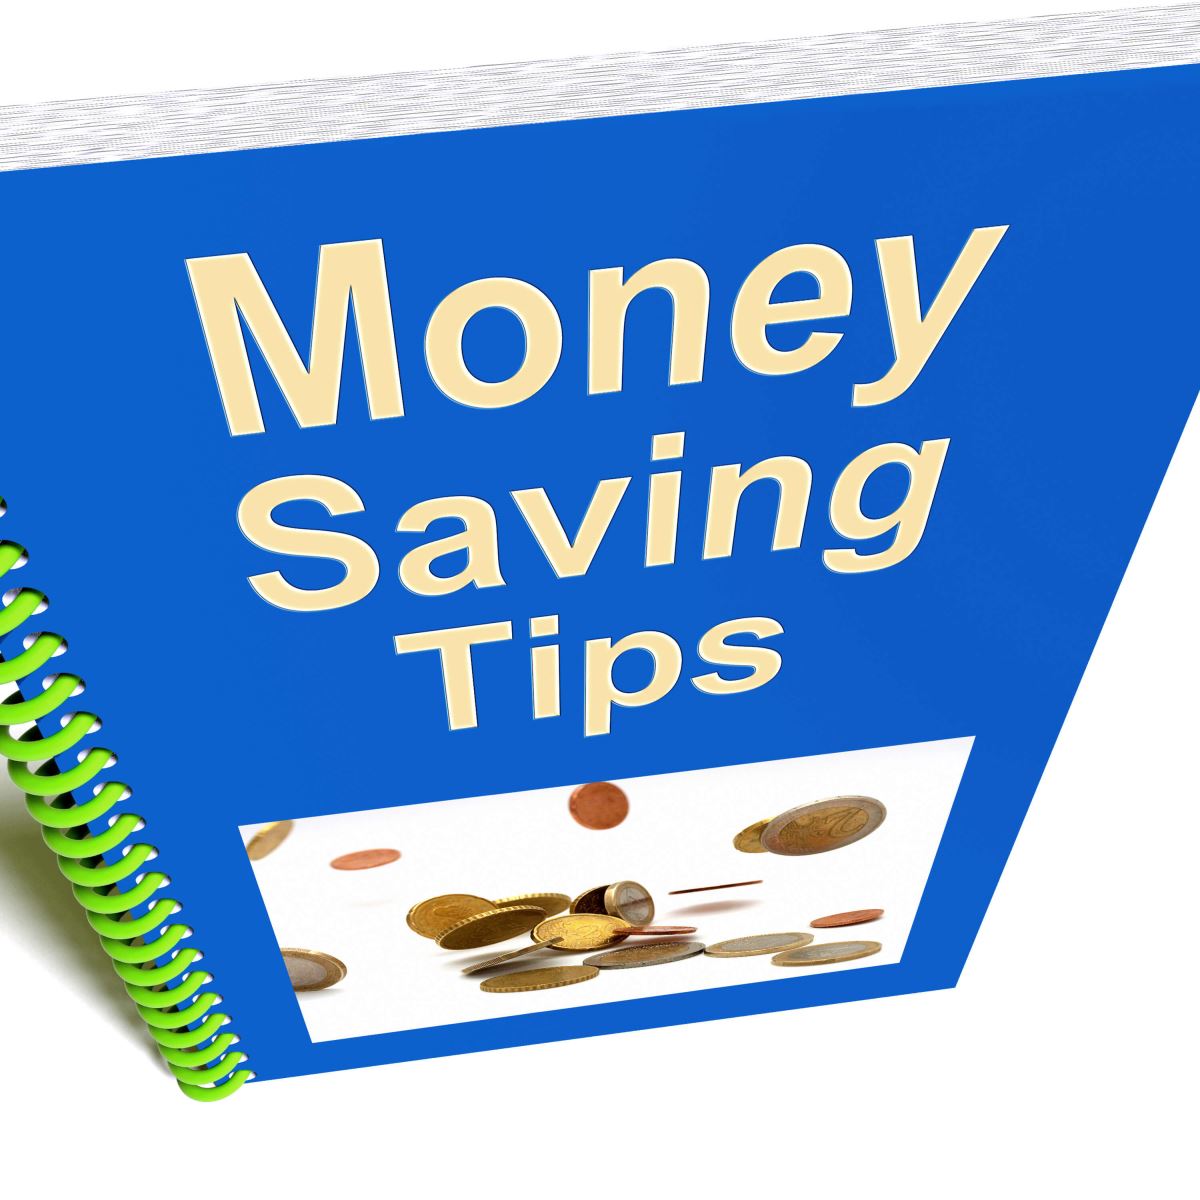 Stock image of a handbook titled Money Saving Tips